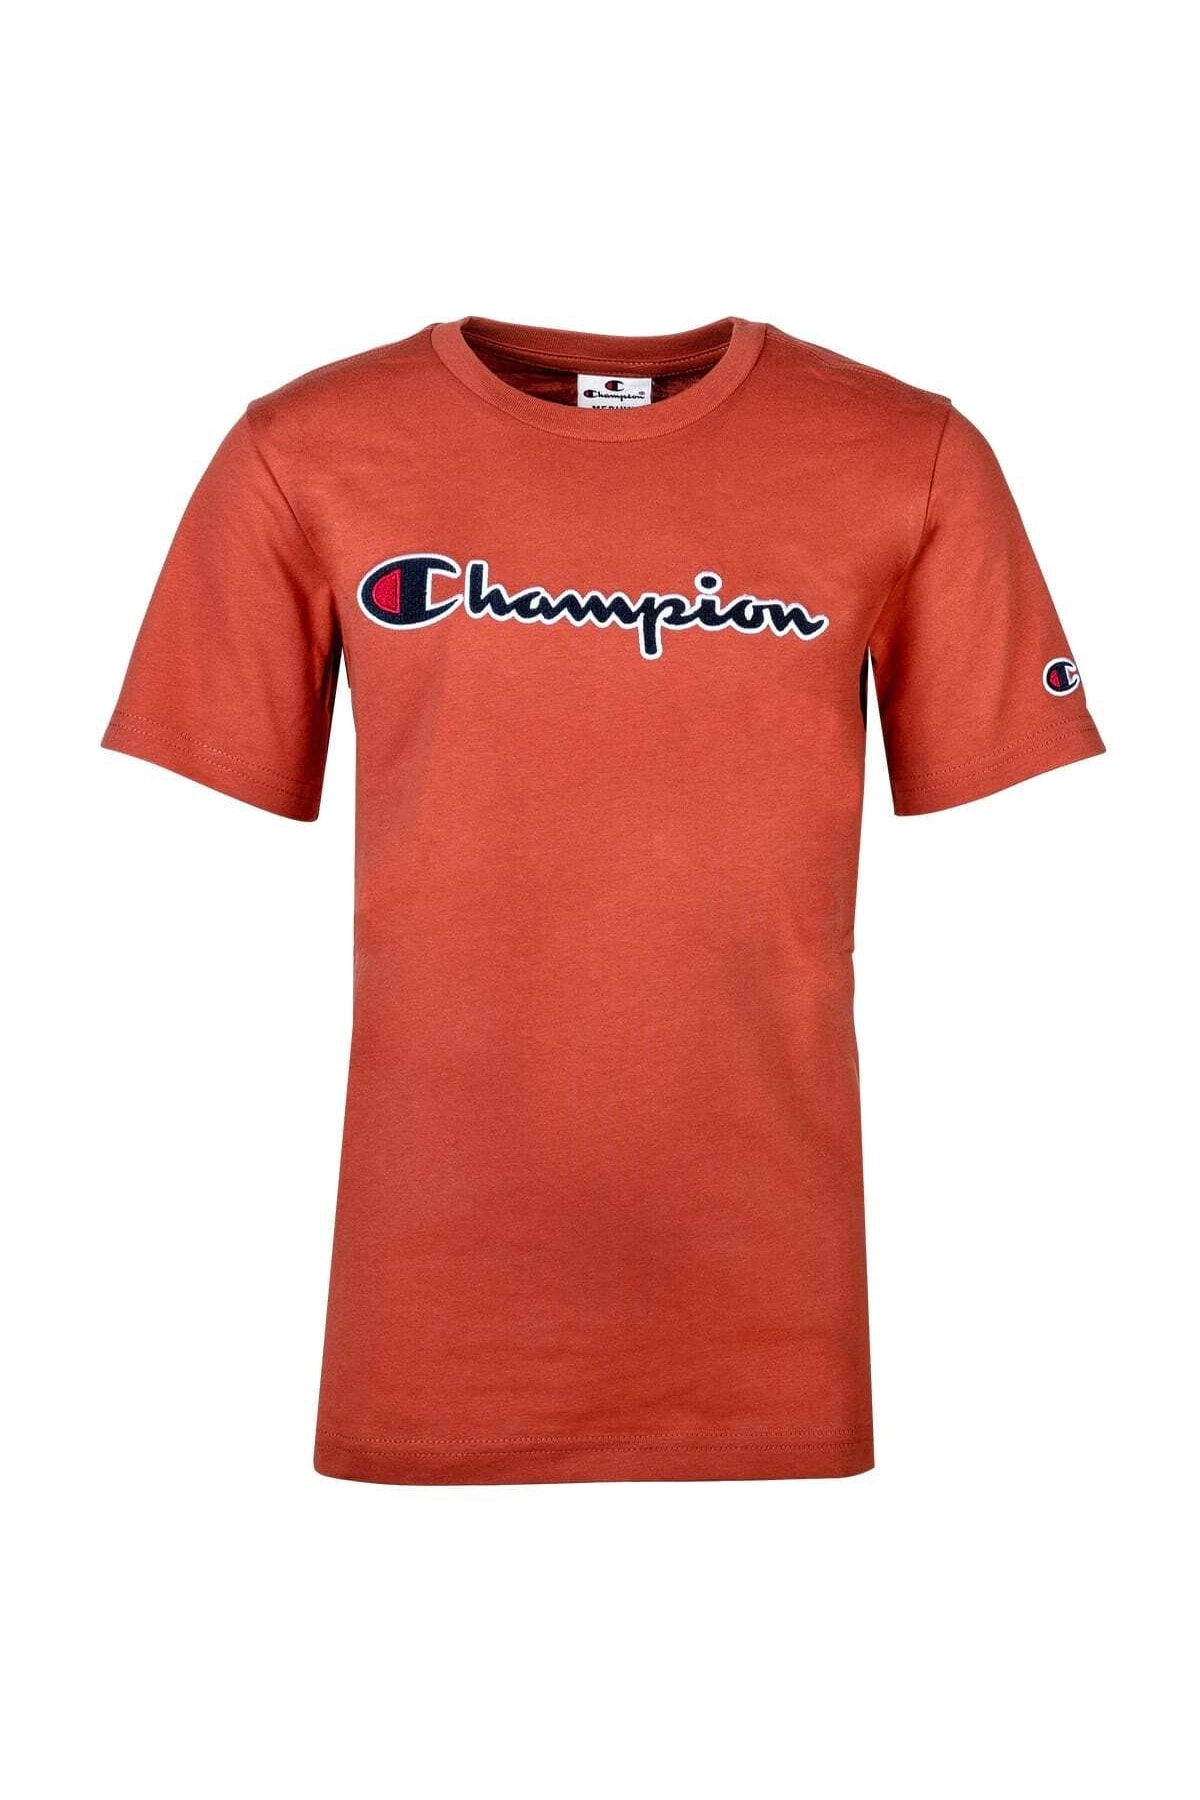 Champion T-Shirt Rot Regular Fit Fast ausverkauft